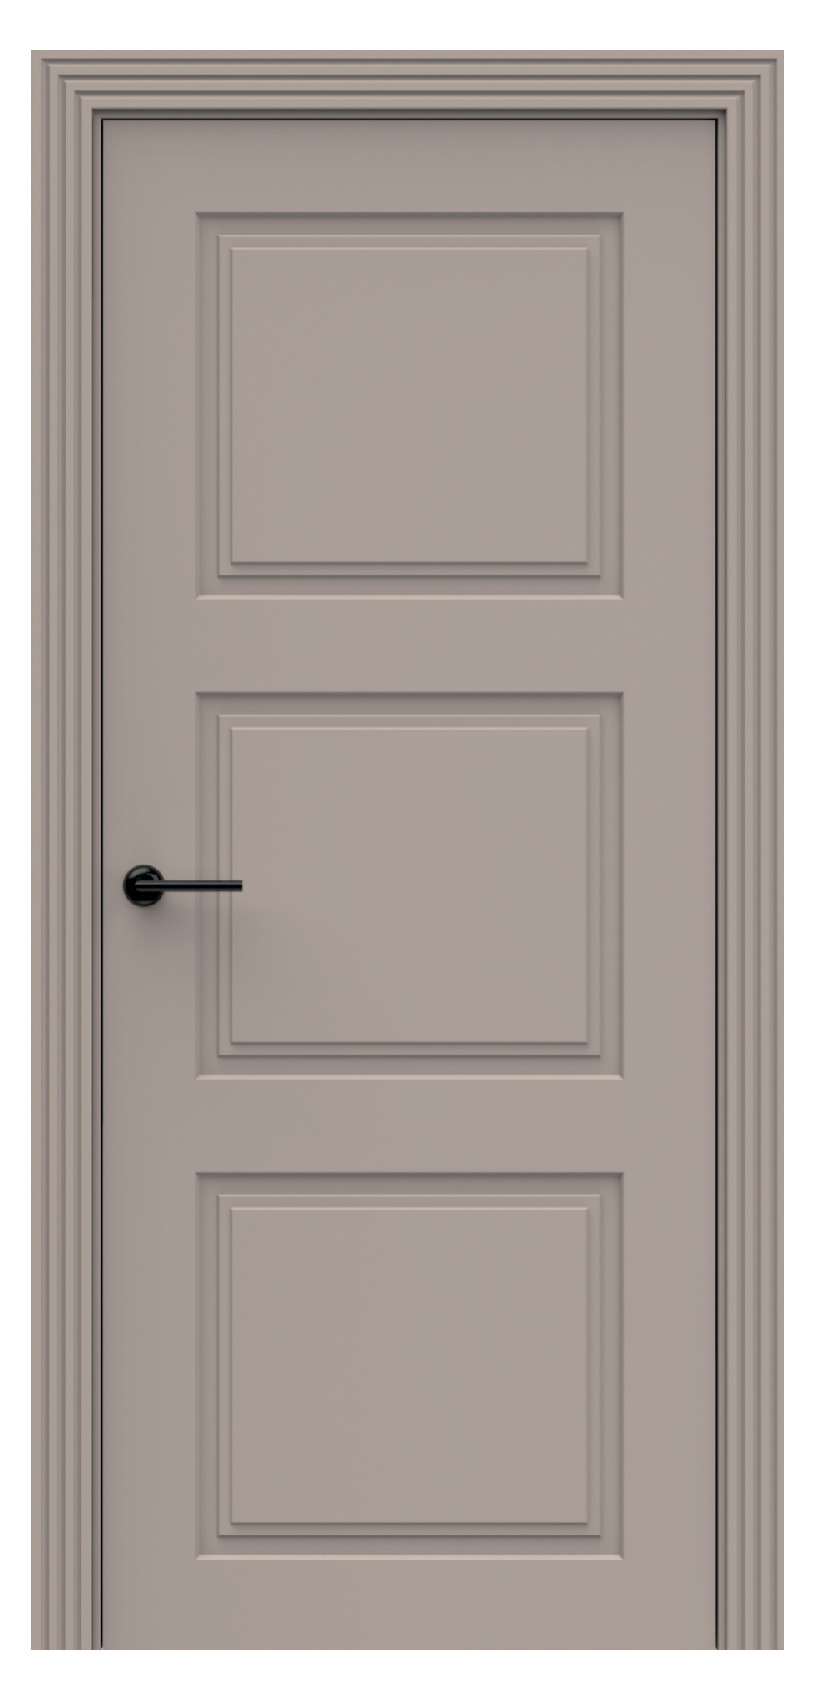 Questdoors Межкомнатная дверь QI9, арт. 17970 - фото №1